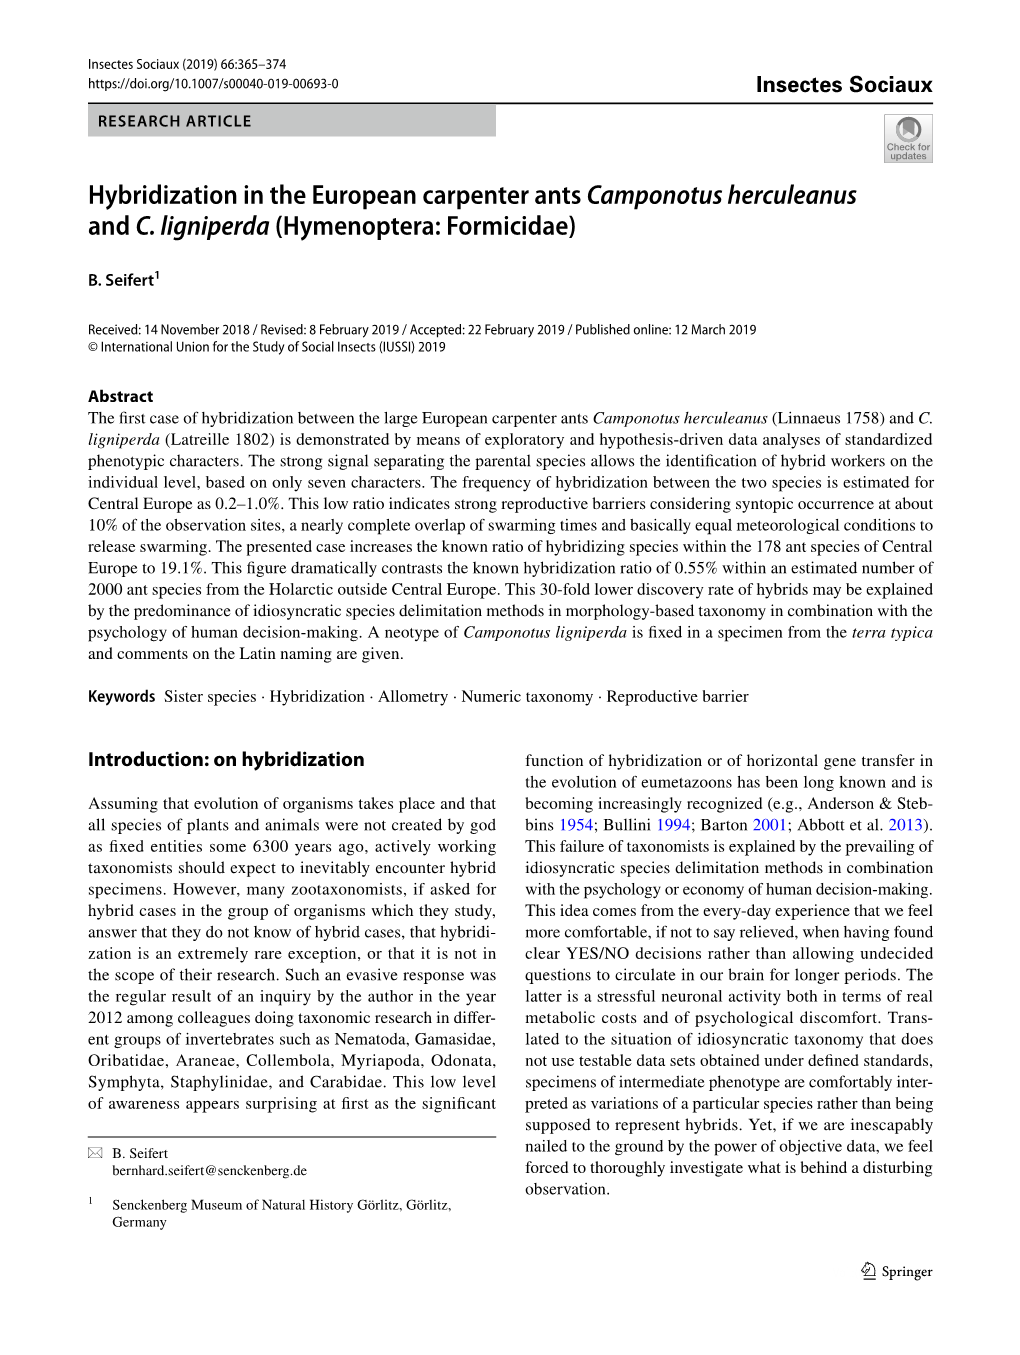 Hybridization in the European Carpenter Ants Camponotus Herculeanus and C